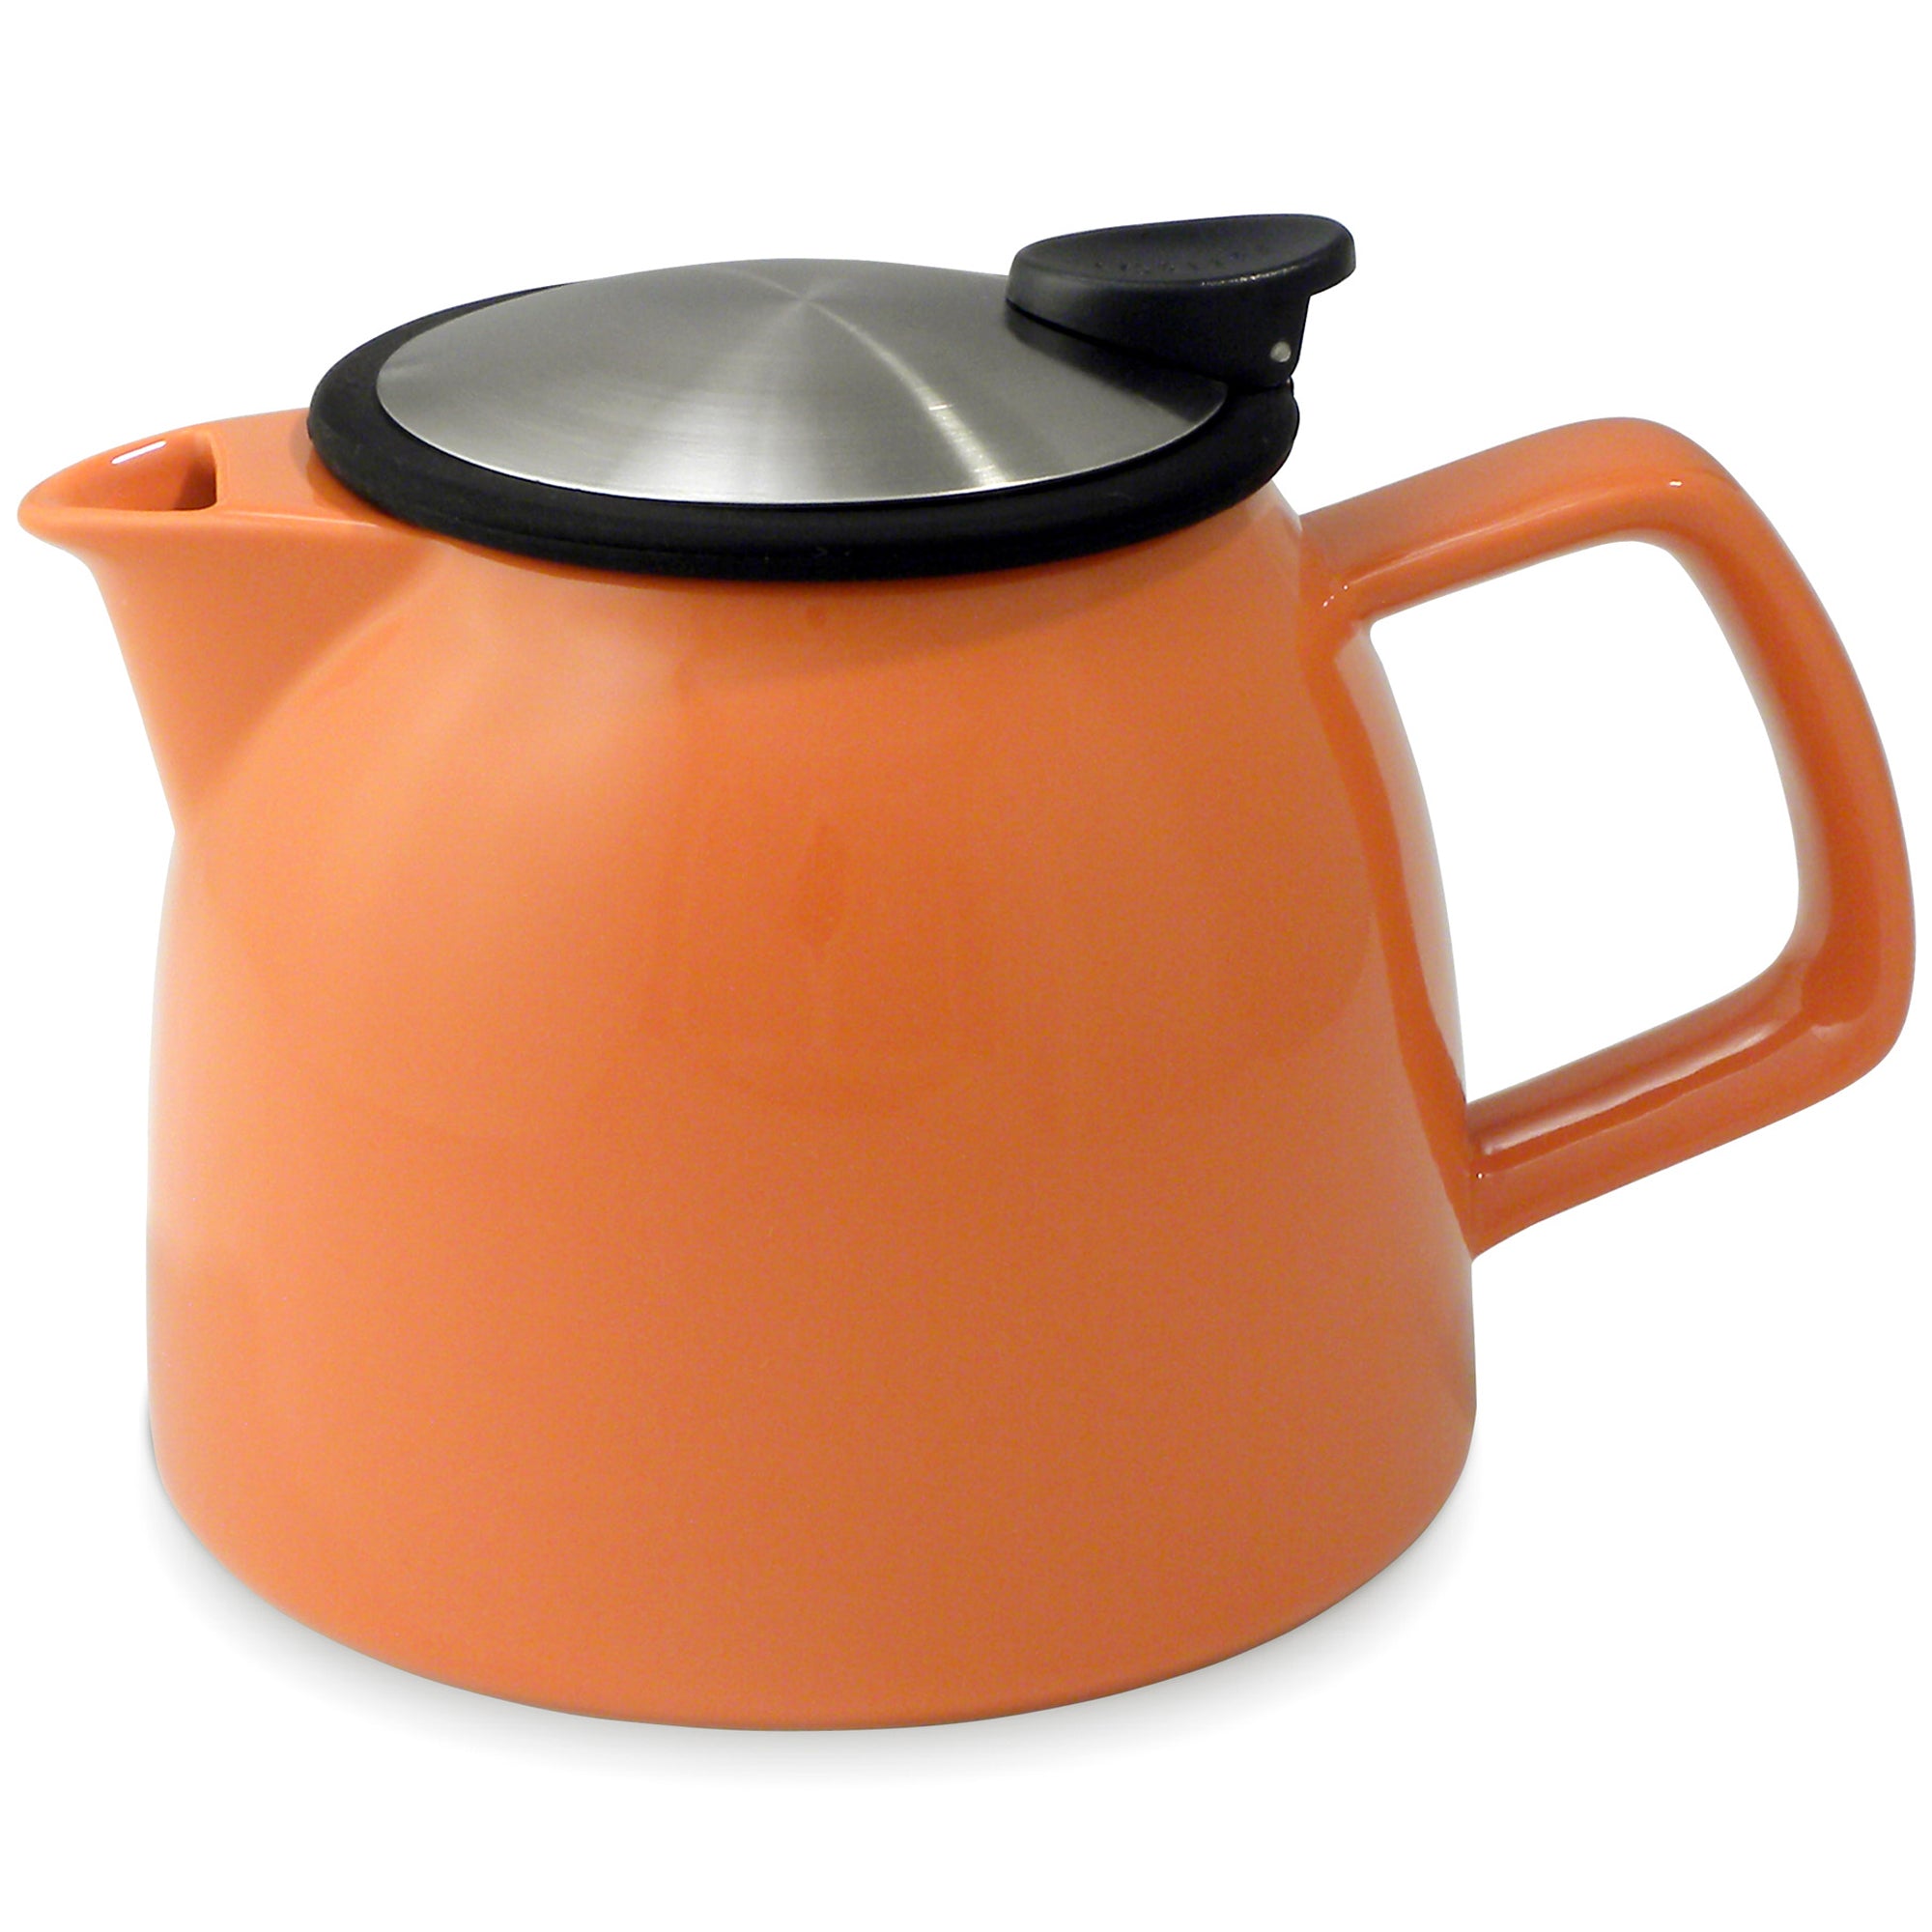 Bell Teapot with Basket Infuser<br>26 oz.